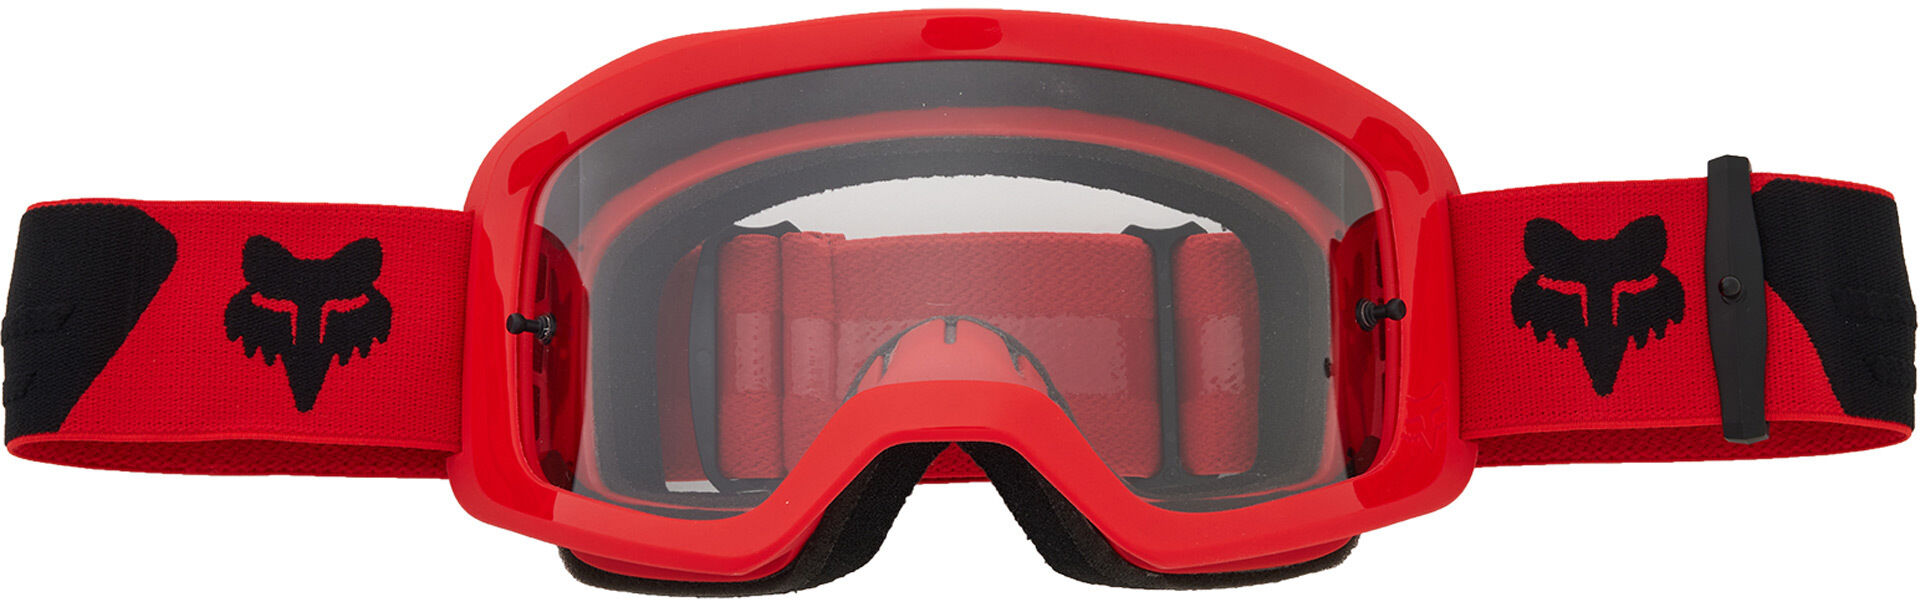 Fox Main Core Gafas de motocross - Negro Rojo (un tamaño)